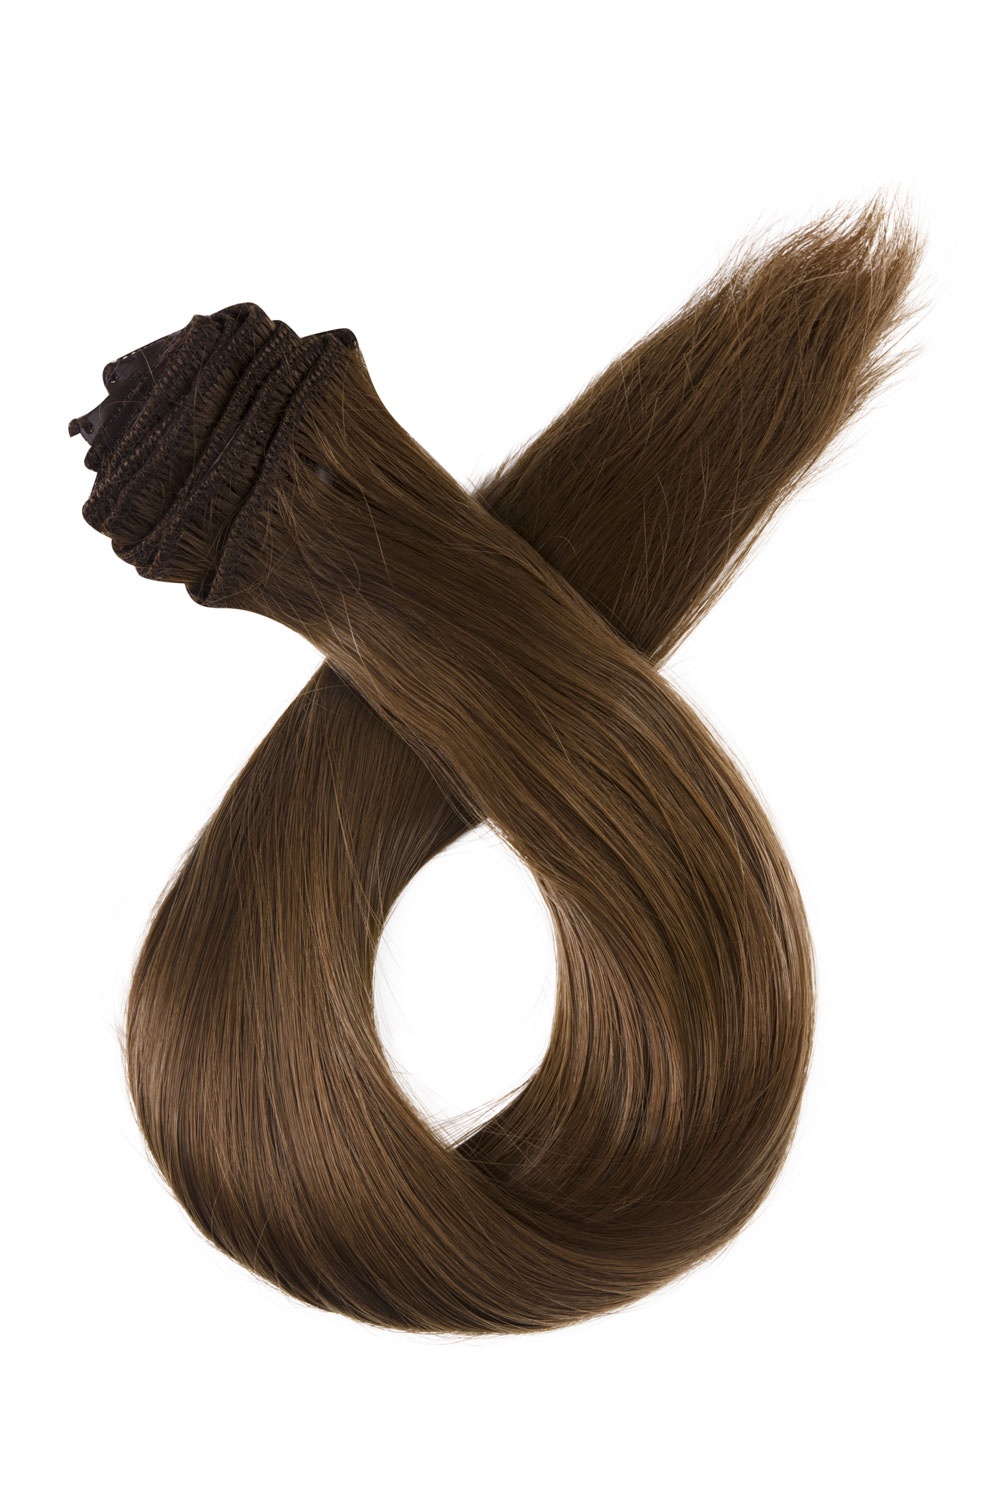 Svetlo gaštanovo hnedé clip-in vlasy, 60cm, 150g, farba 10